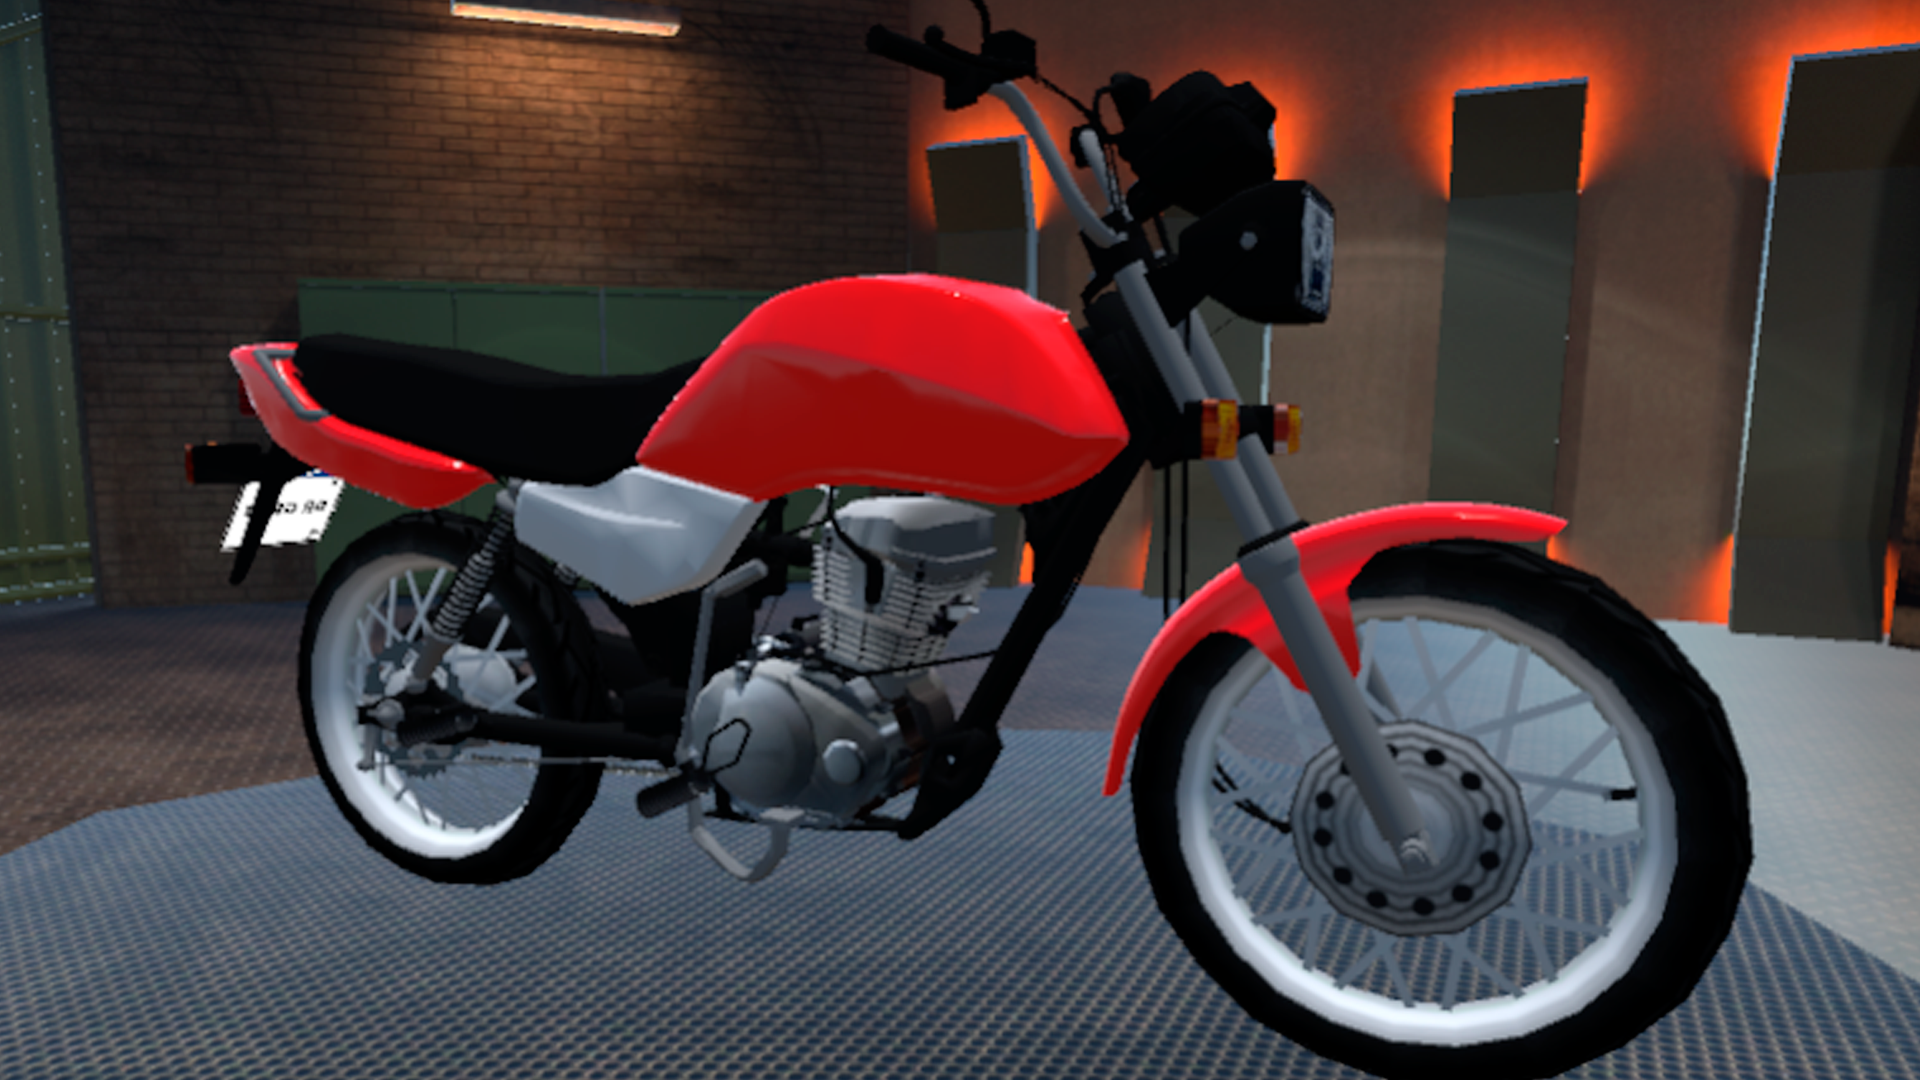 Download Grau brazilian MX wheelie bike android on PC